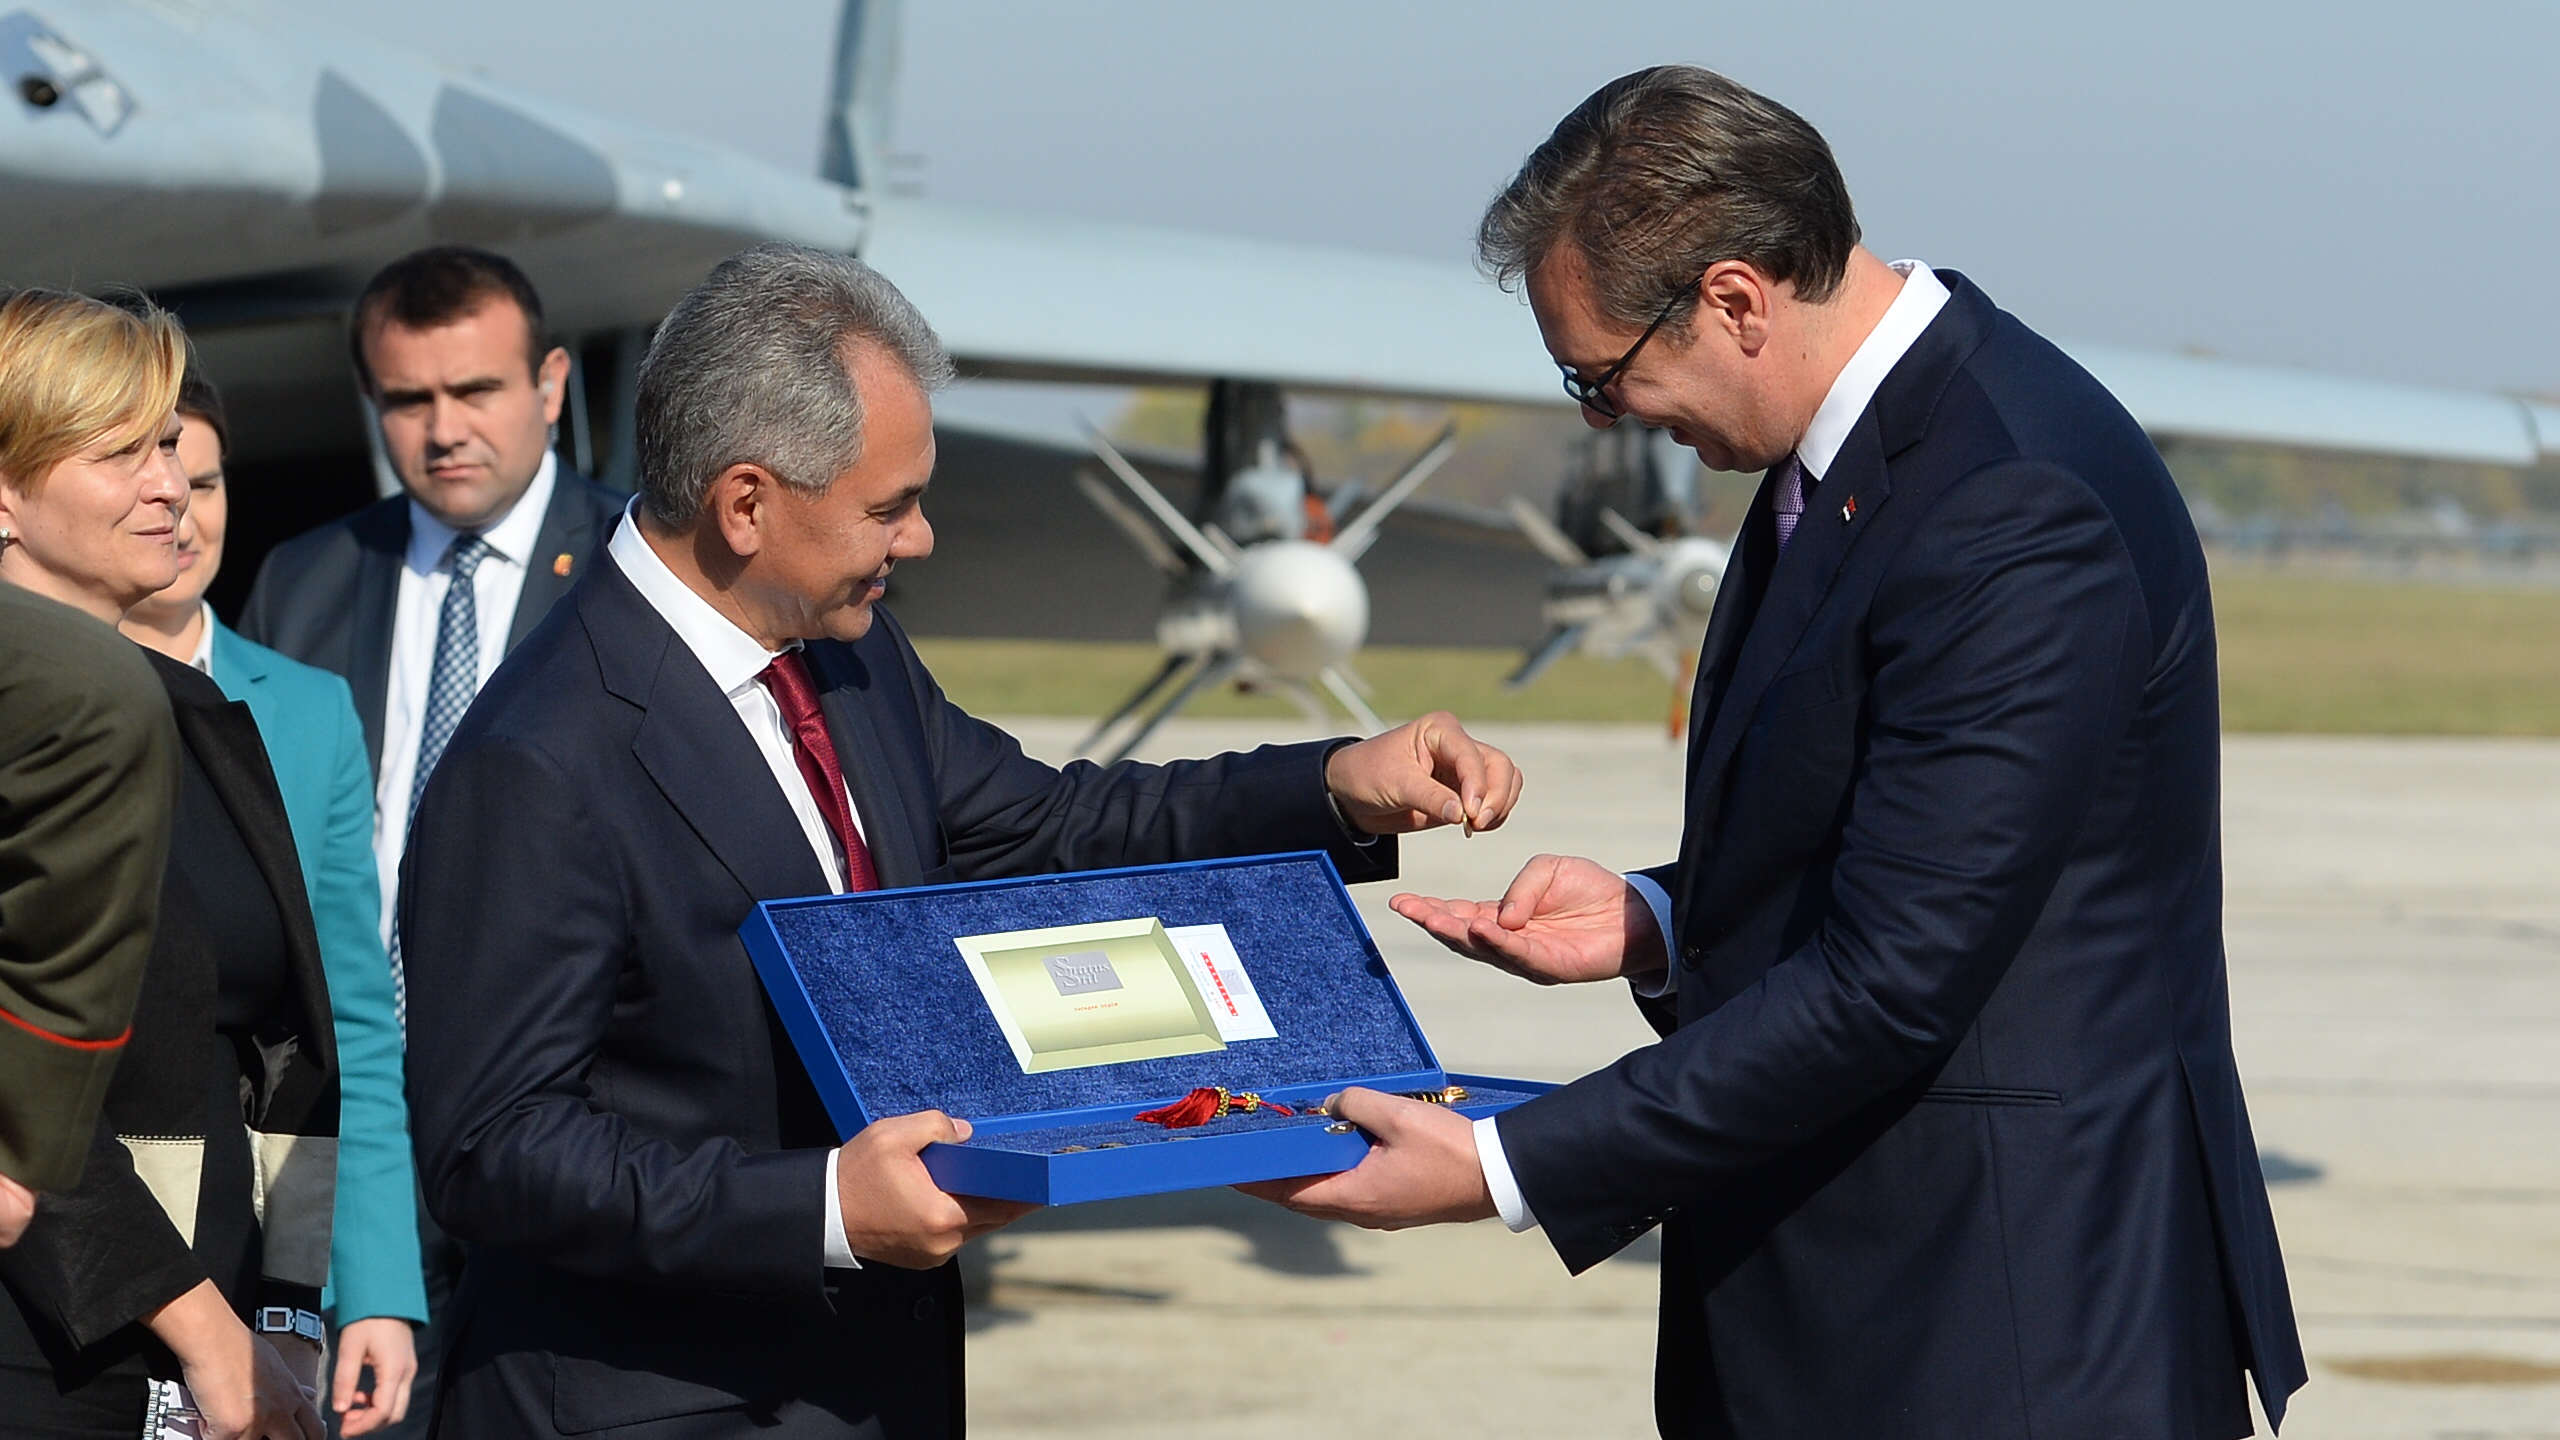 Predsednik Srbije Aleksandar Vucic na svecanosti na aerodromu Batajnica.